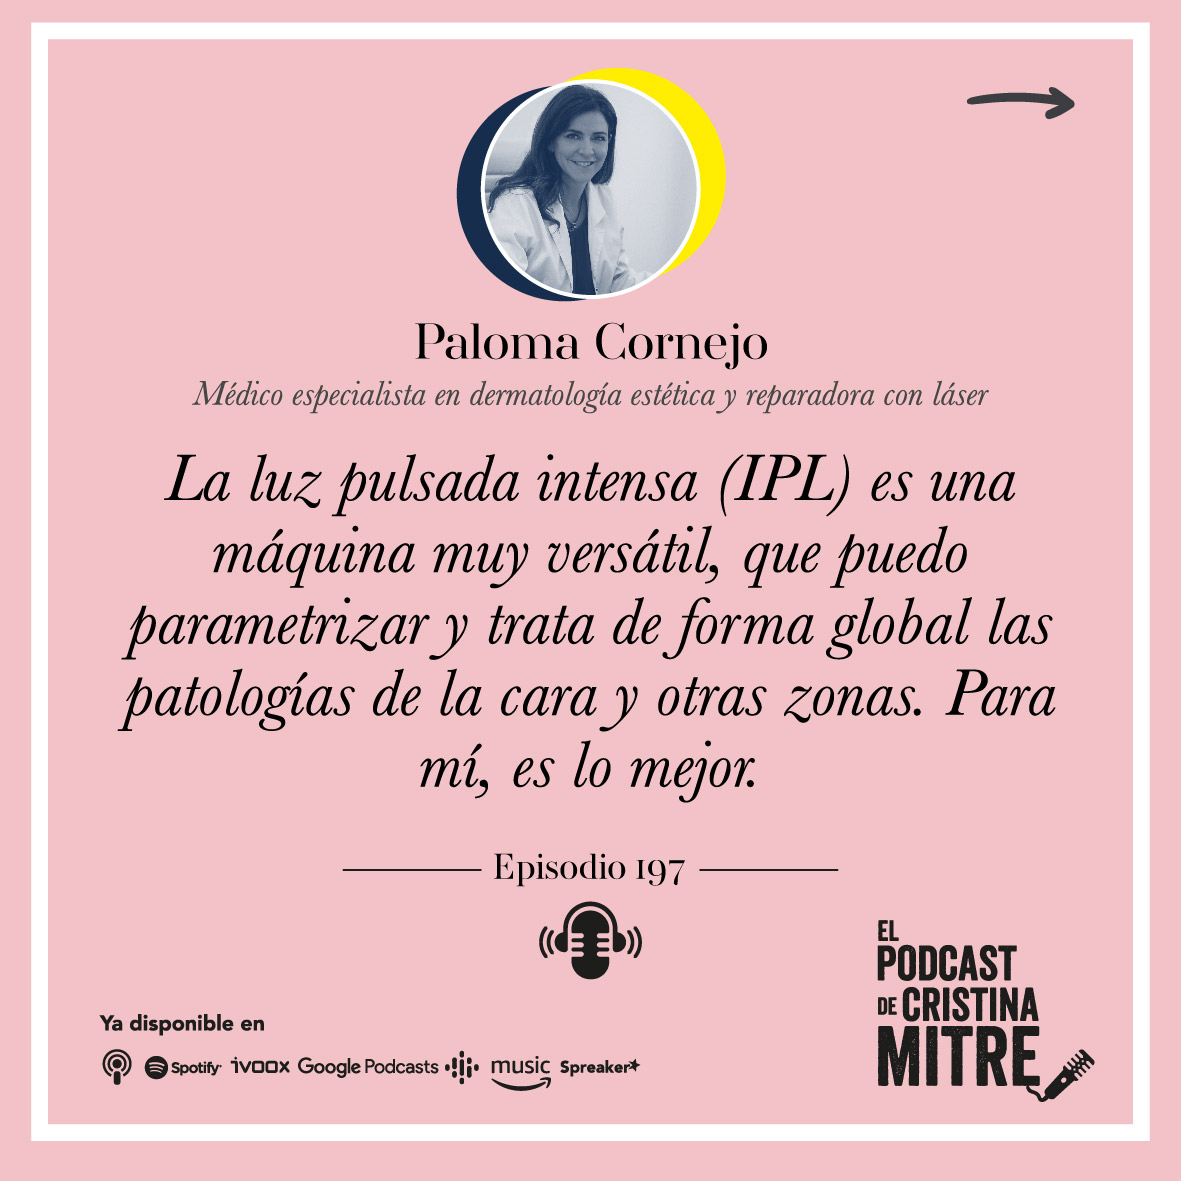 El Podcast de Cristina Mitre Paloma Cornejo IPL